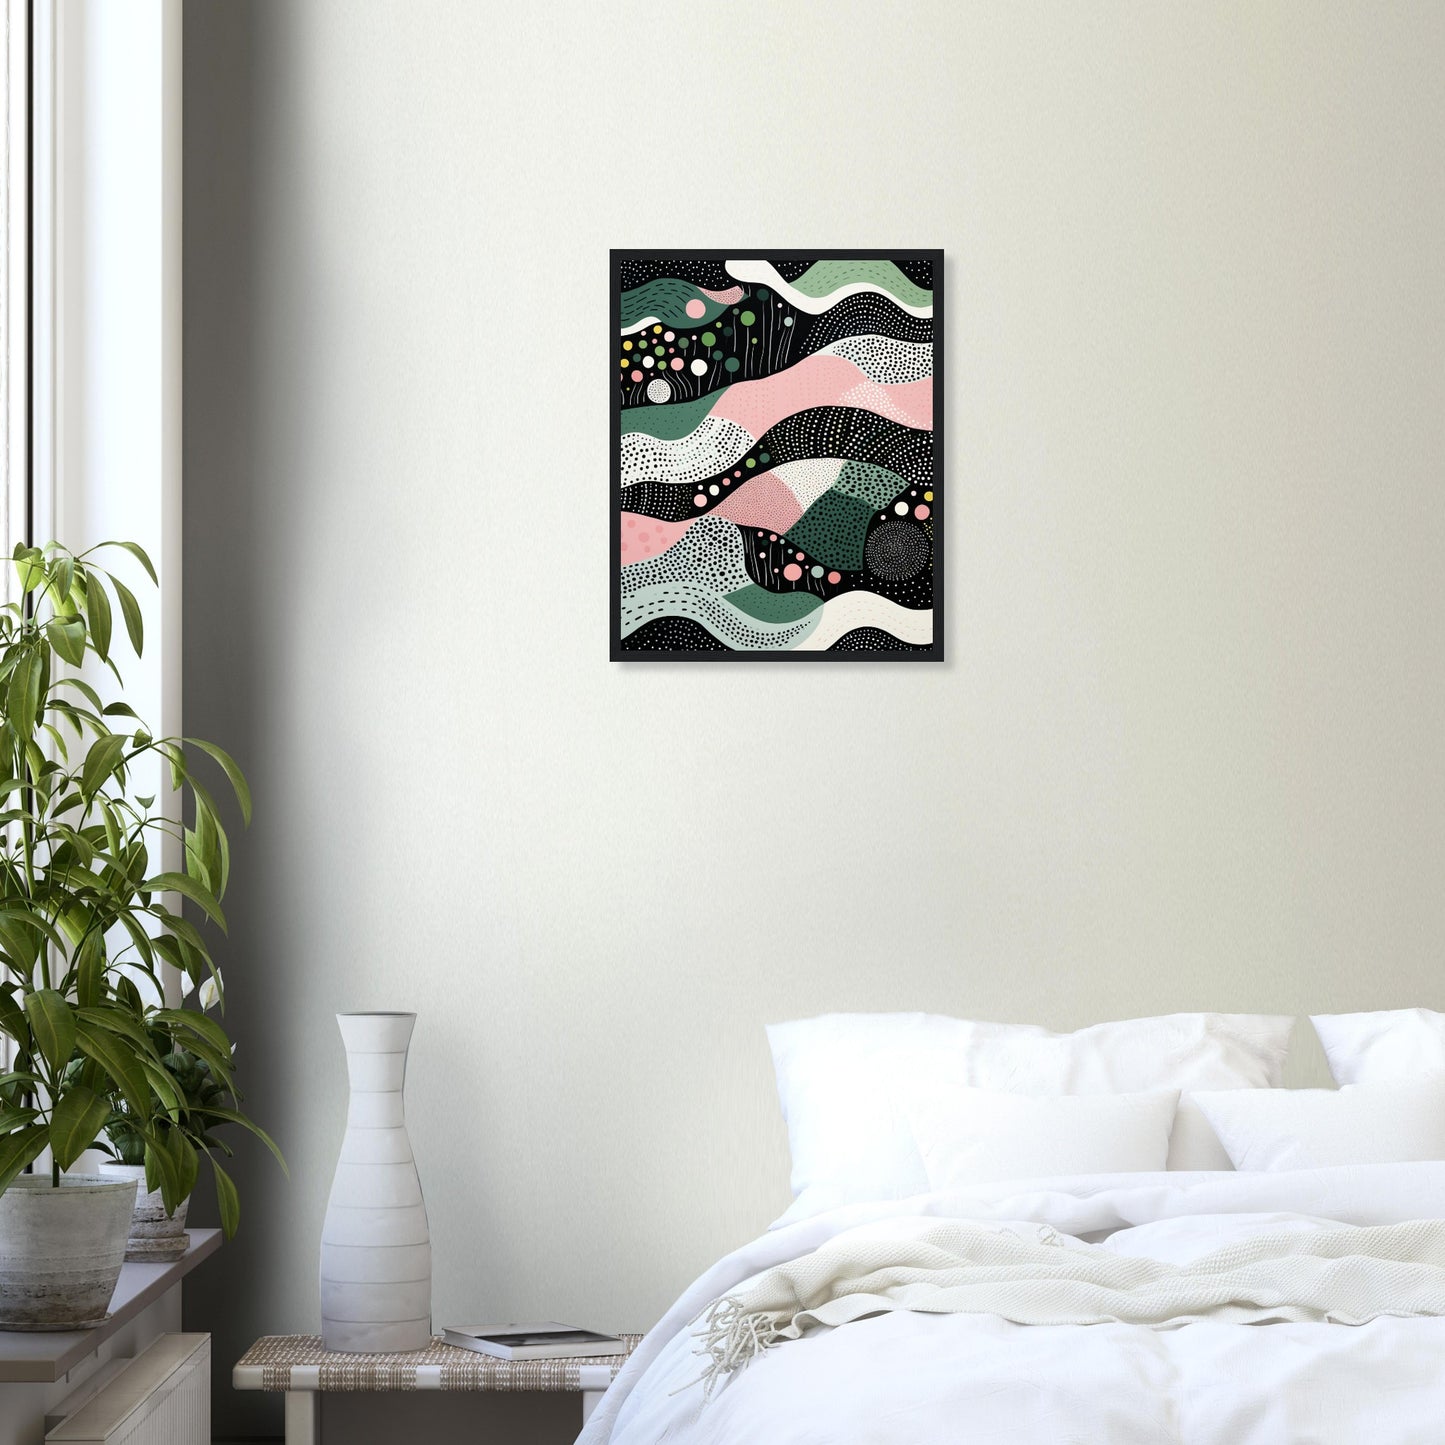 Layers - Modern Minimalist Abstract Wall Art Print Black Green Pink